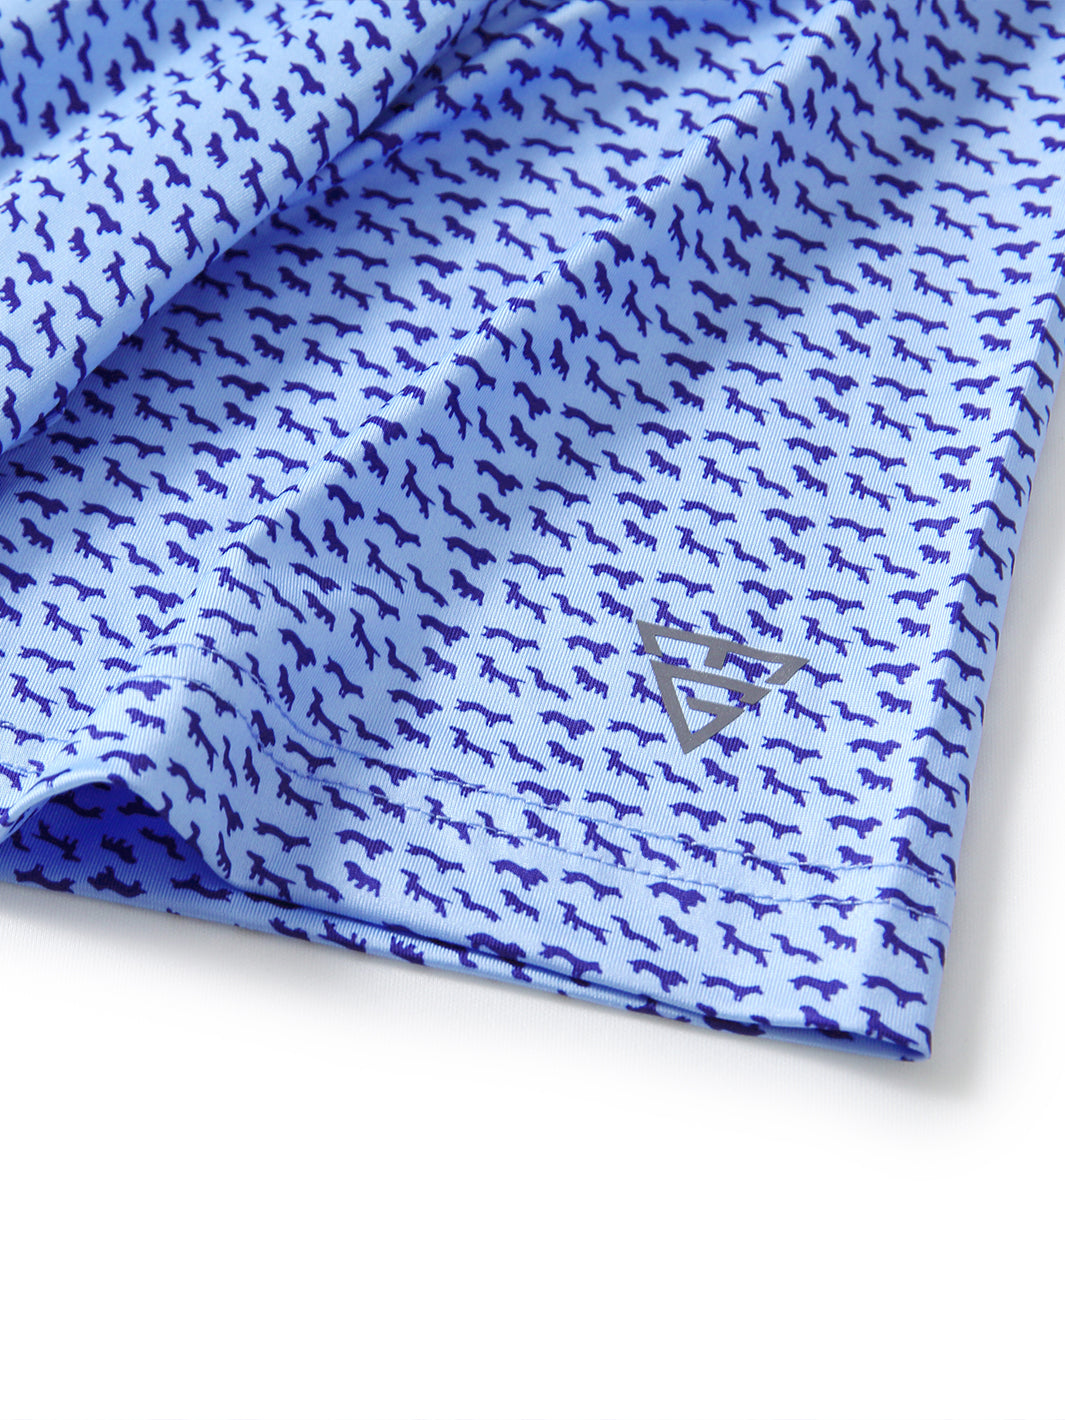 Men's Printed Golf Shirts-Bluejay Navy Dogs